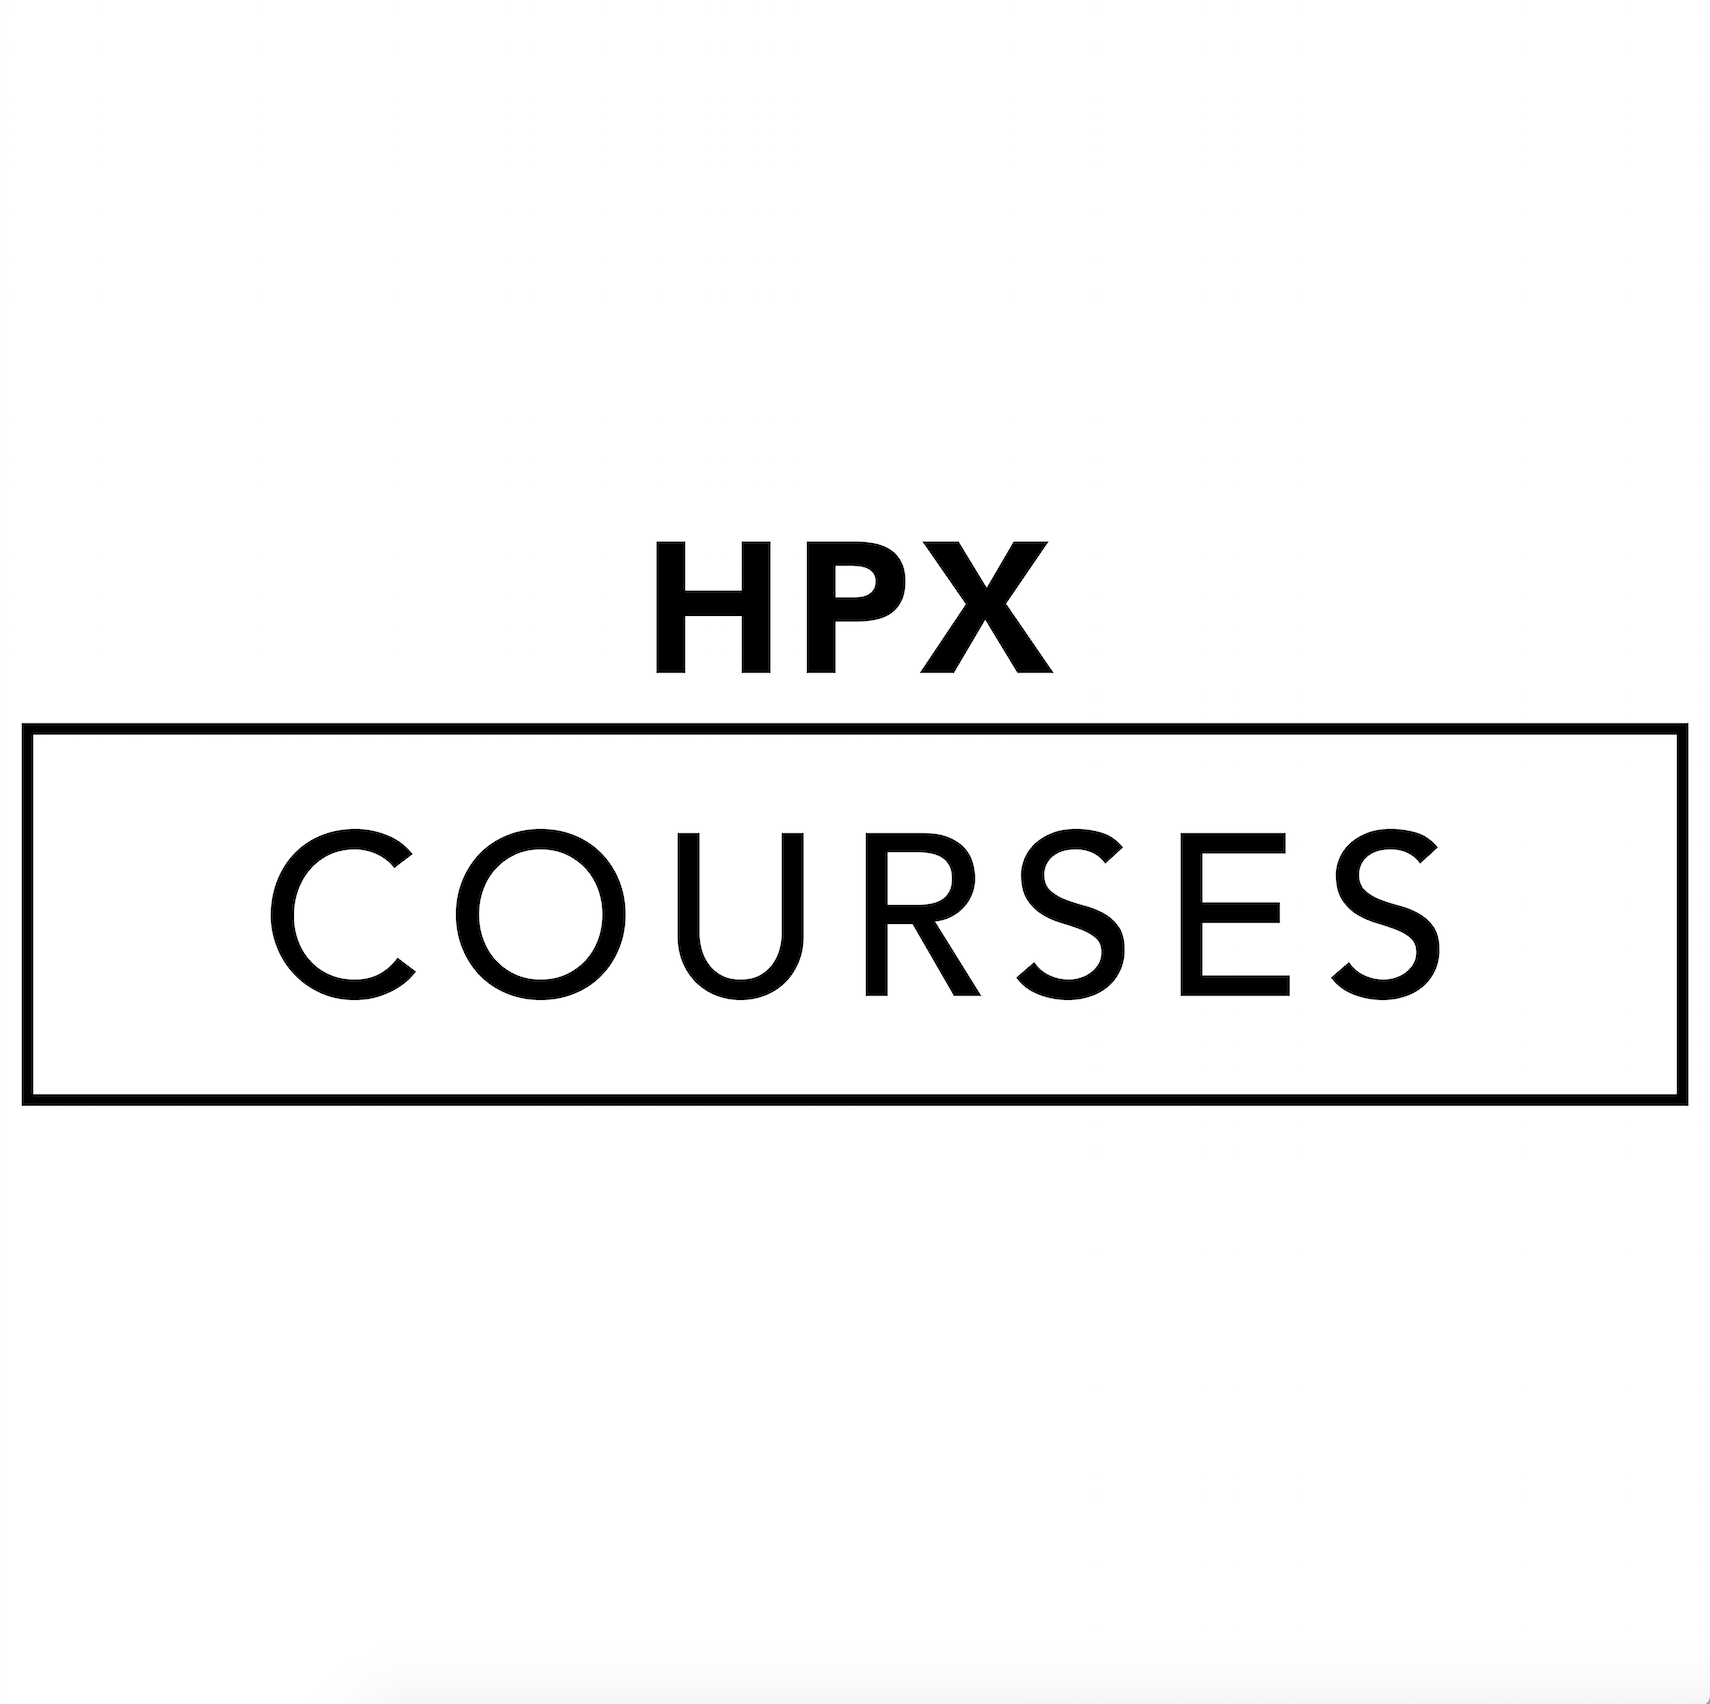 HPX Courses - Brendon Burchard